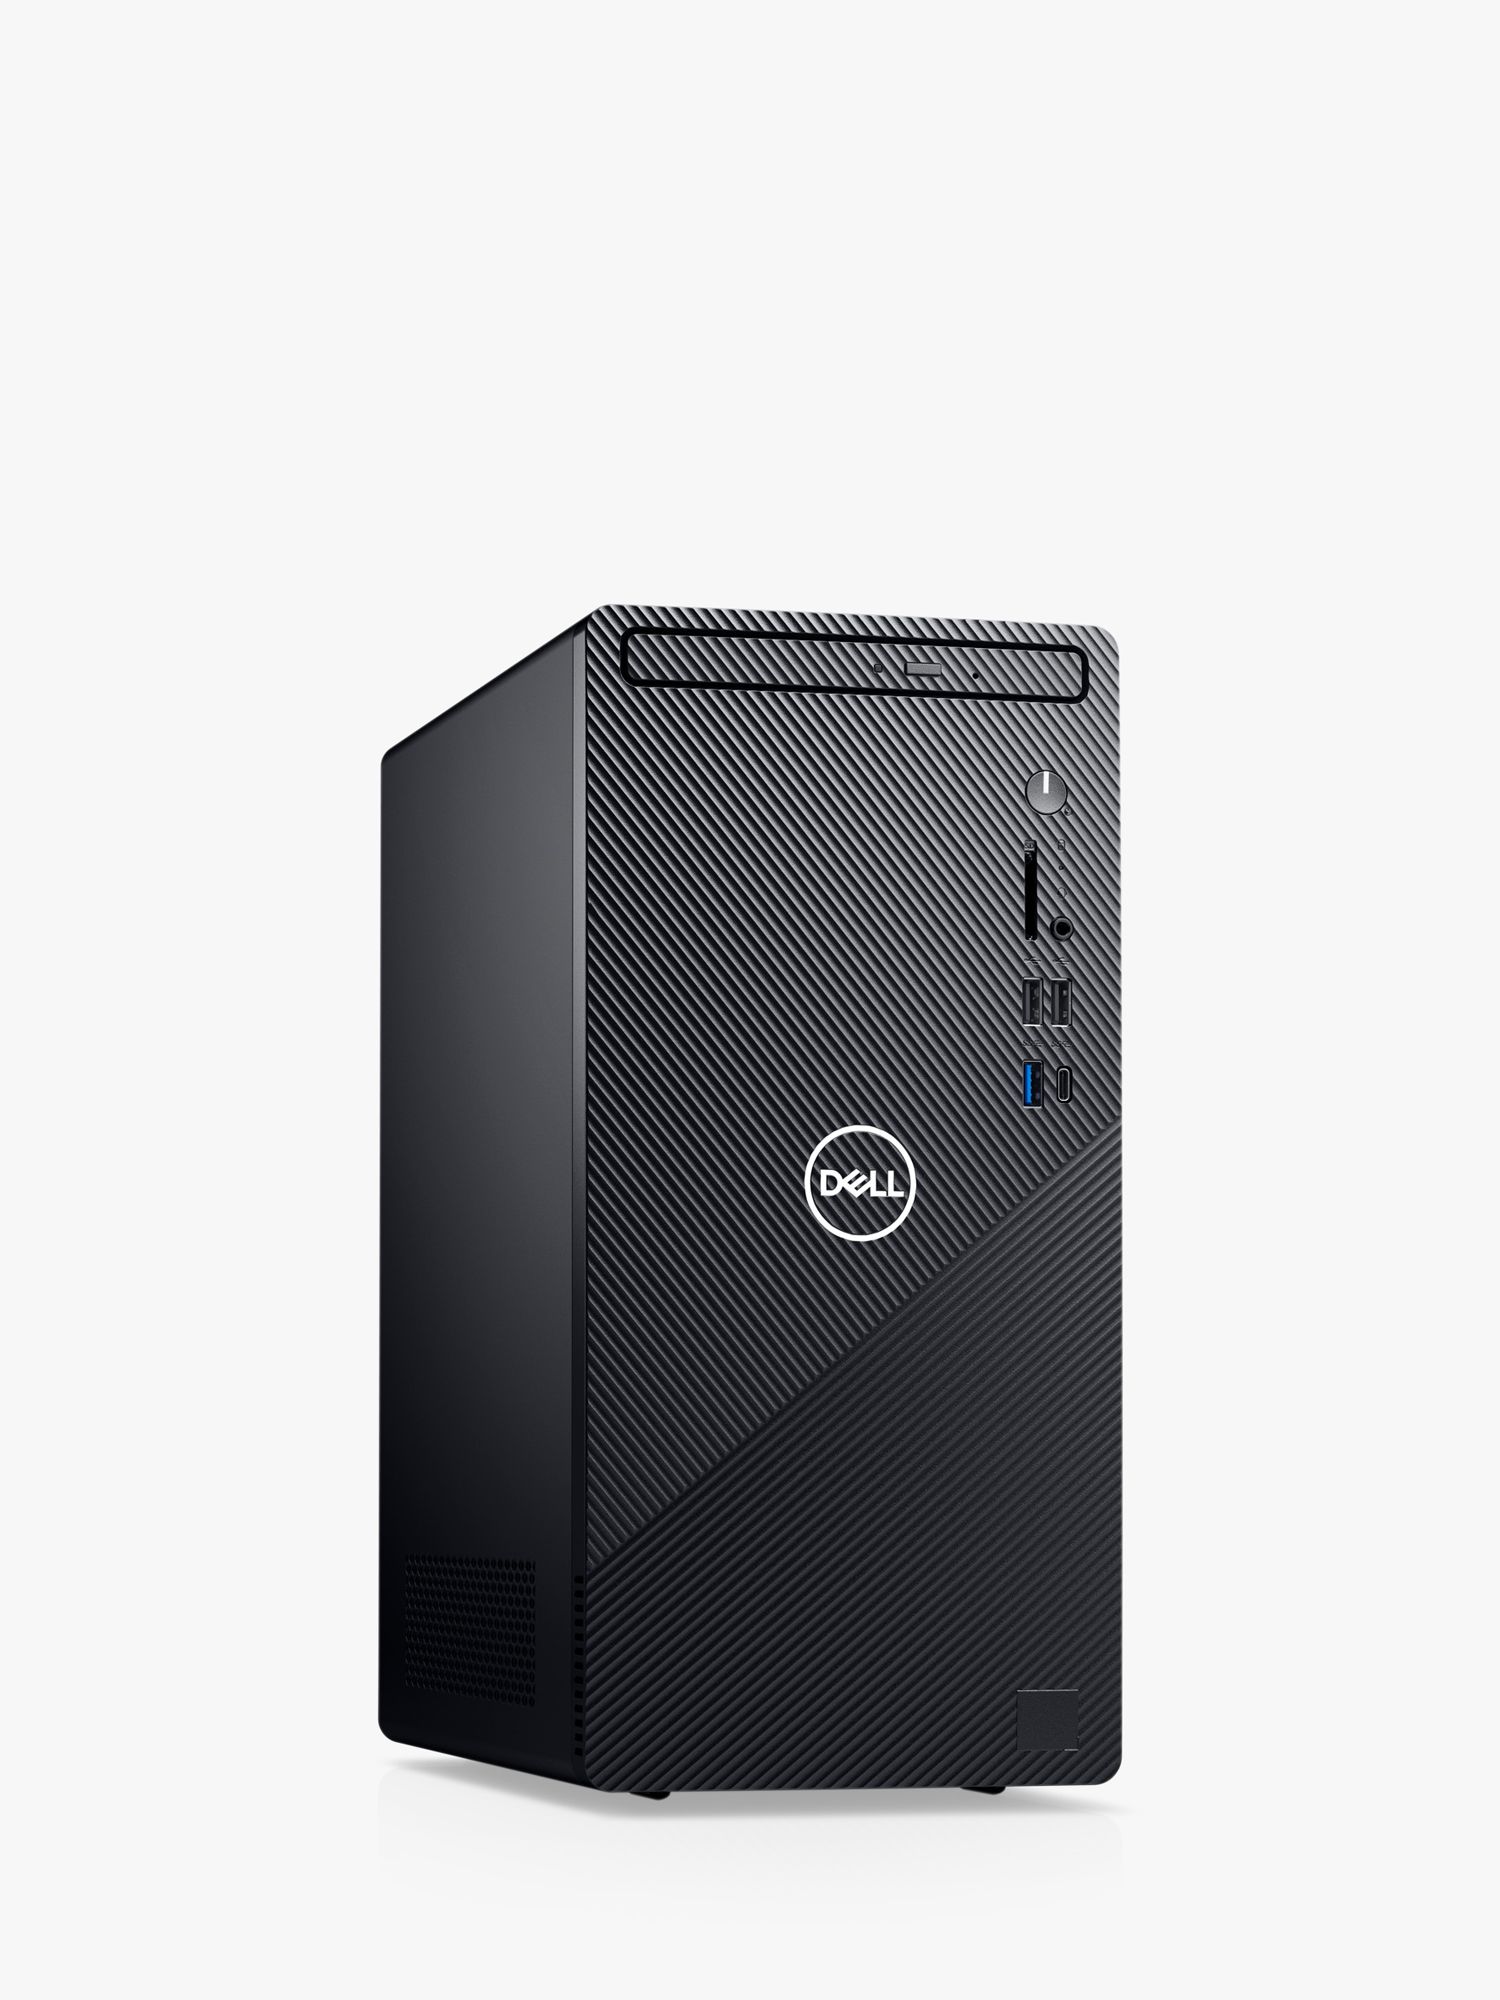 Dell Inspiron 3891 Desktop PC, Intel Core i3 Processor, 8GB RAM, 1TB HDD, Black